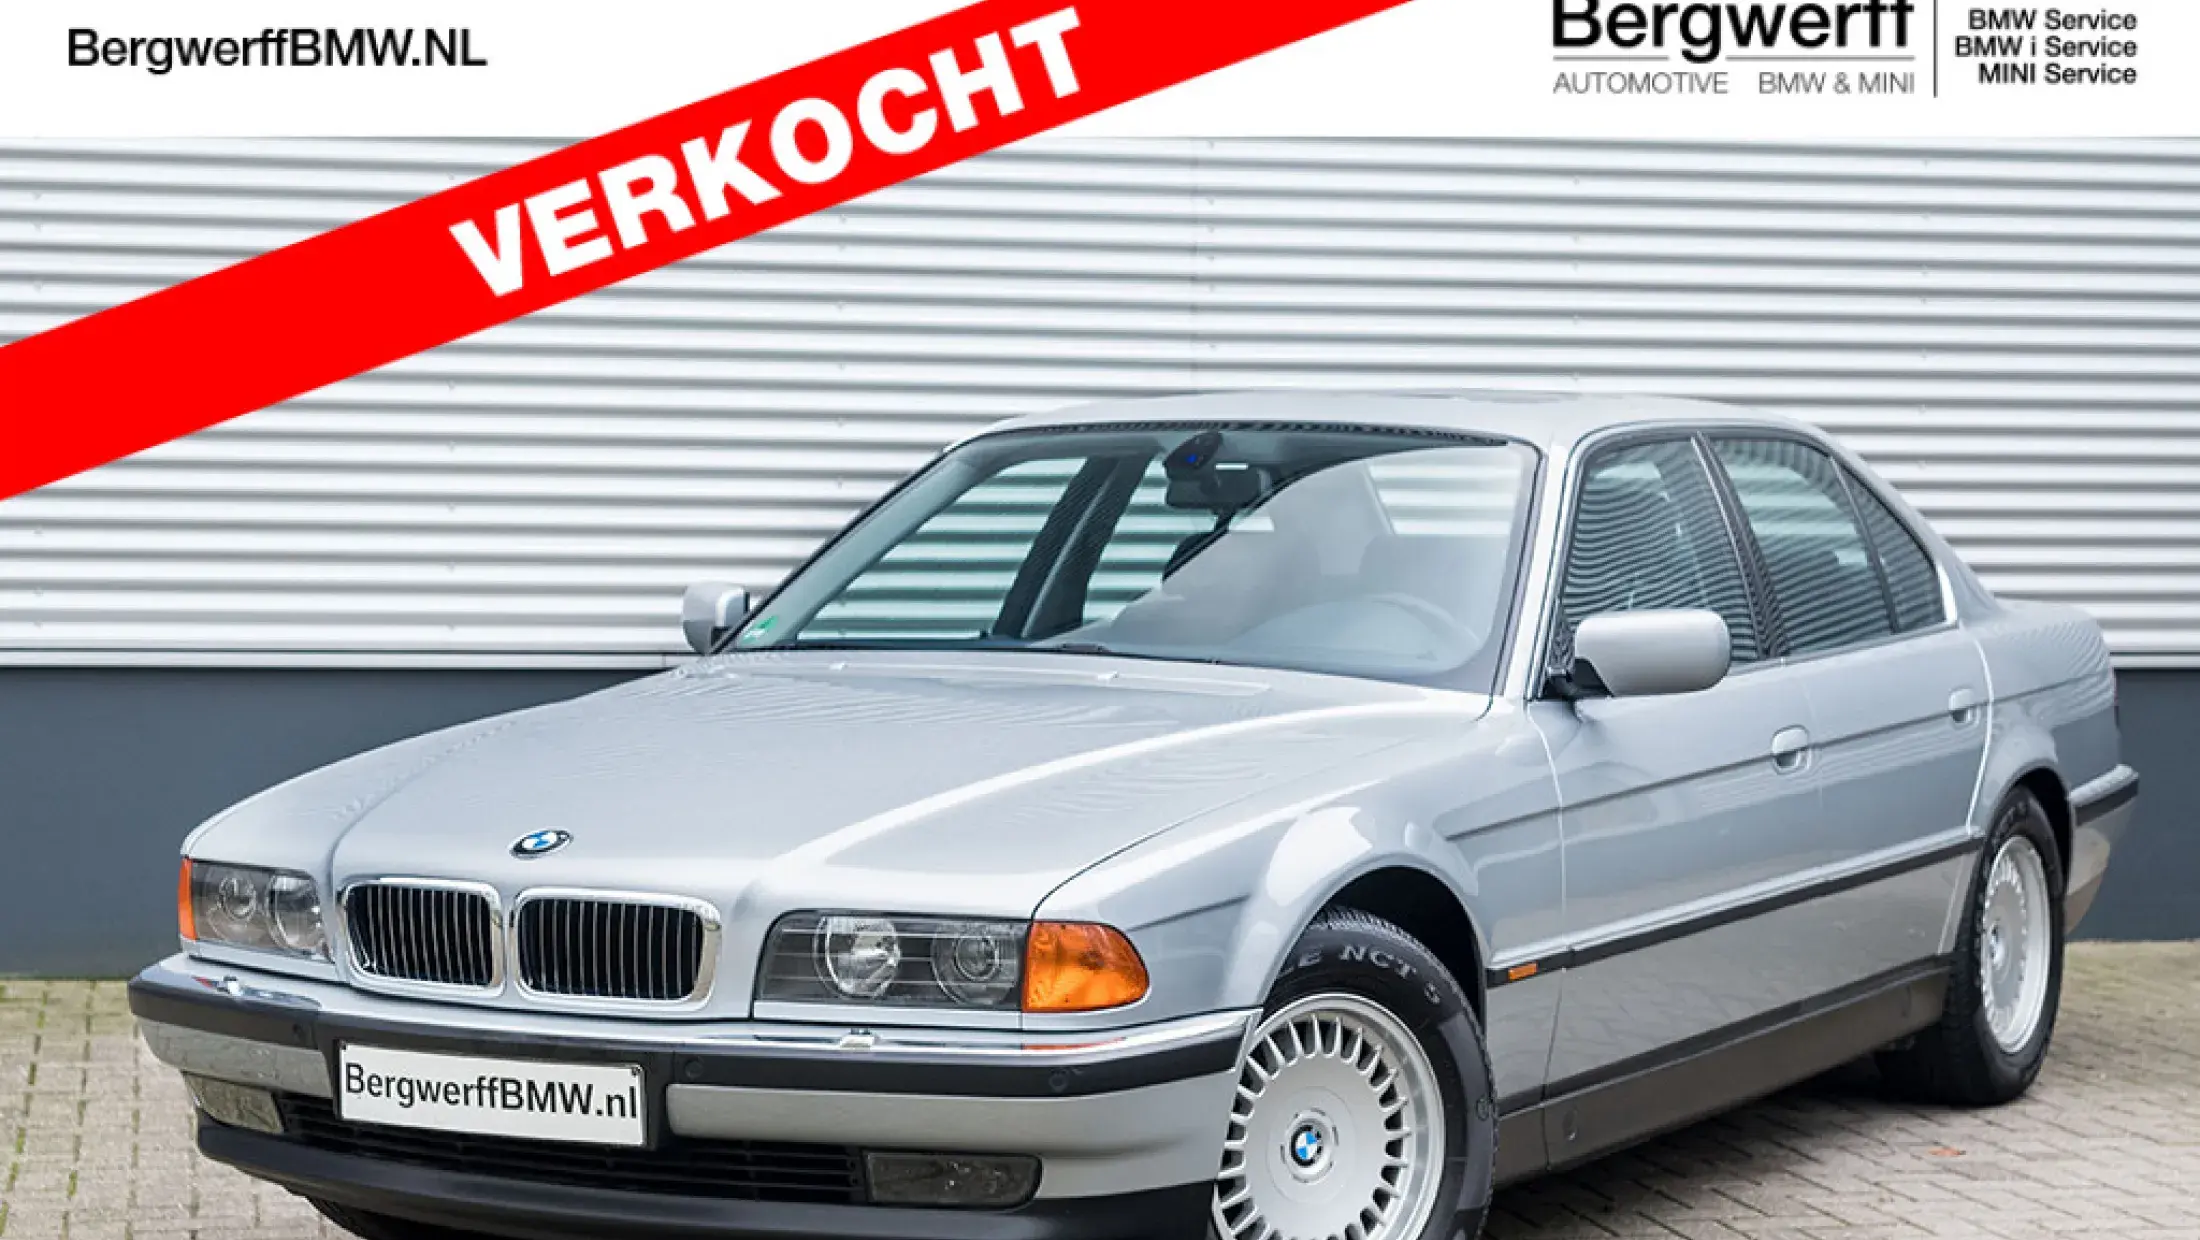 BMW 750i E38 1996 Arctic Silver Metallic Marineblau Volleder Montana Bergwerff Classic